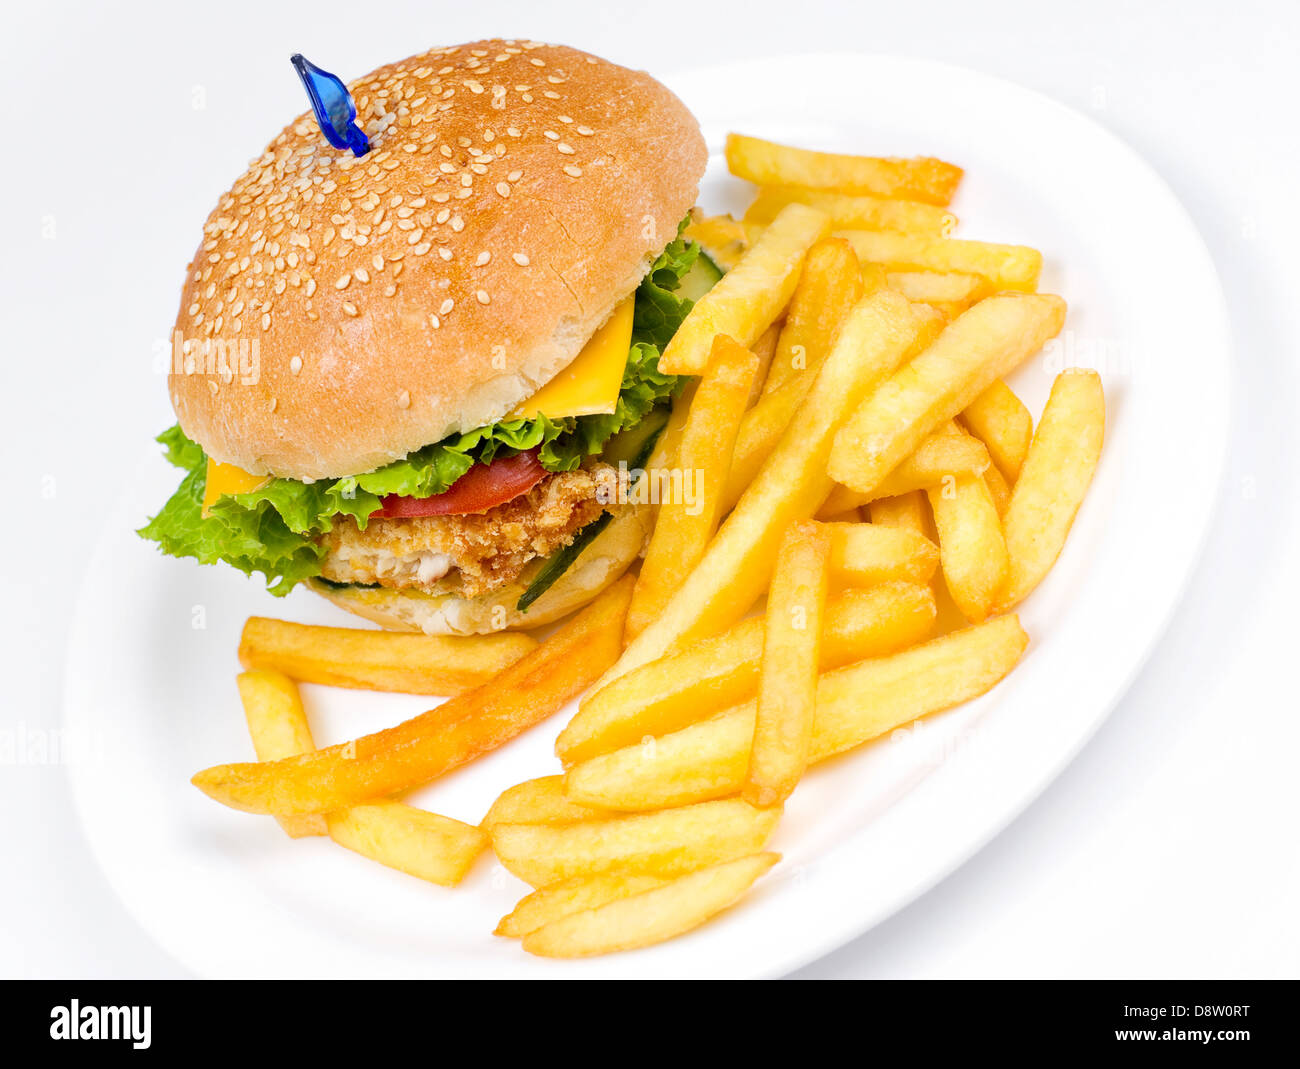 cheeseburger with deep fried potatoes Stock Photo